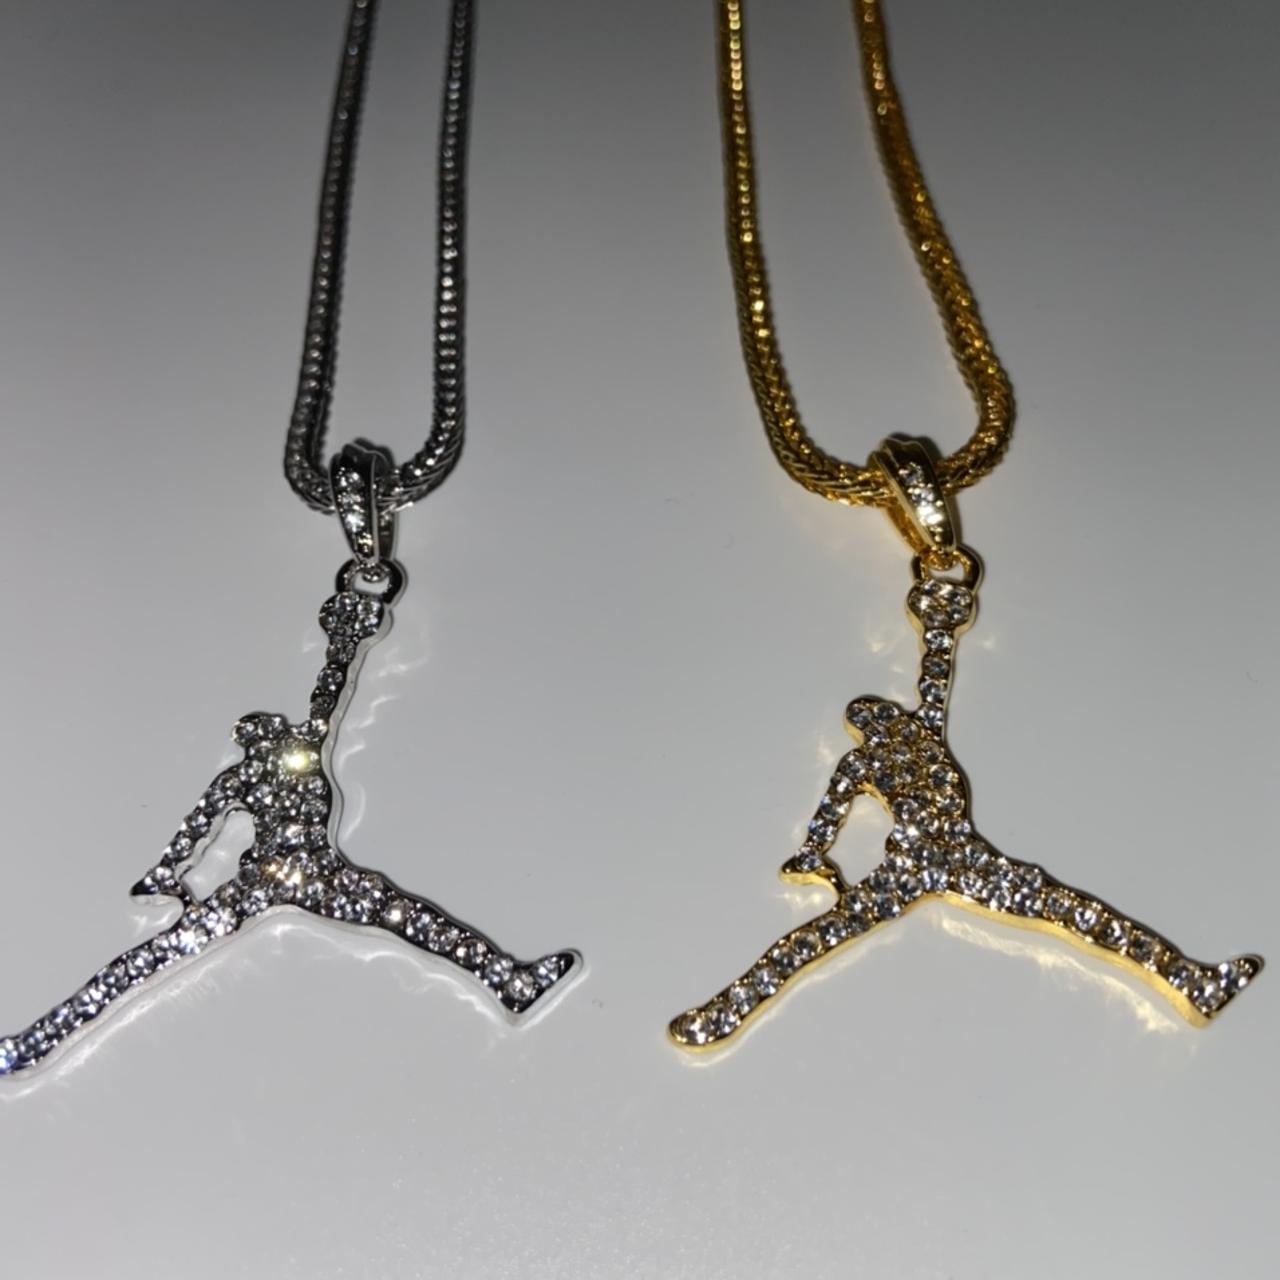 Jordan NBA iced out necklace diamond pendant and - Depop